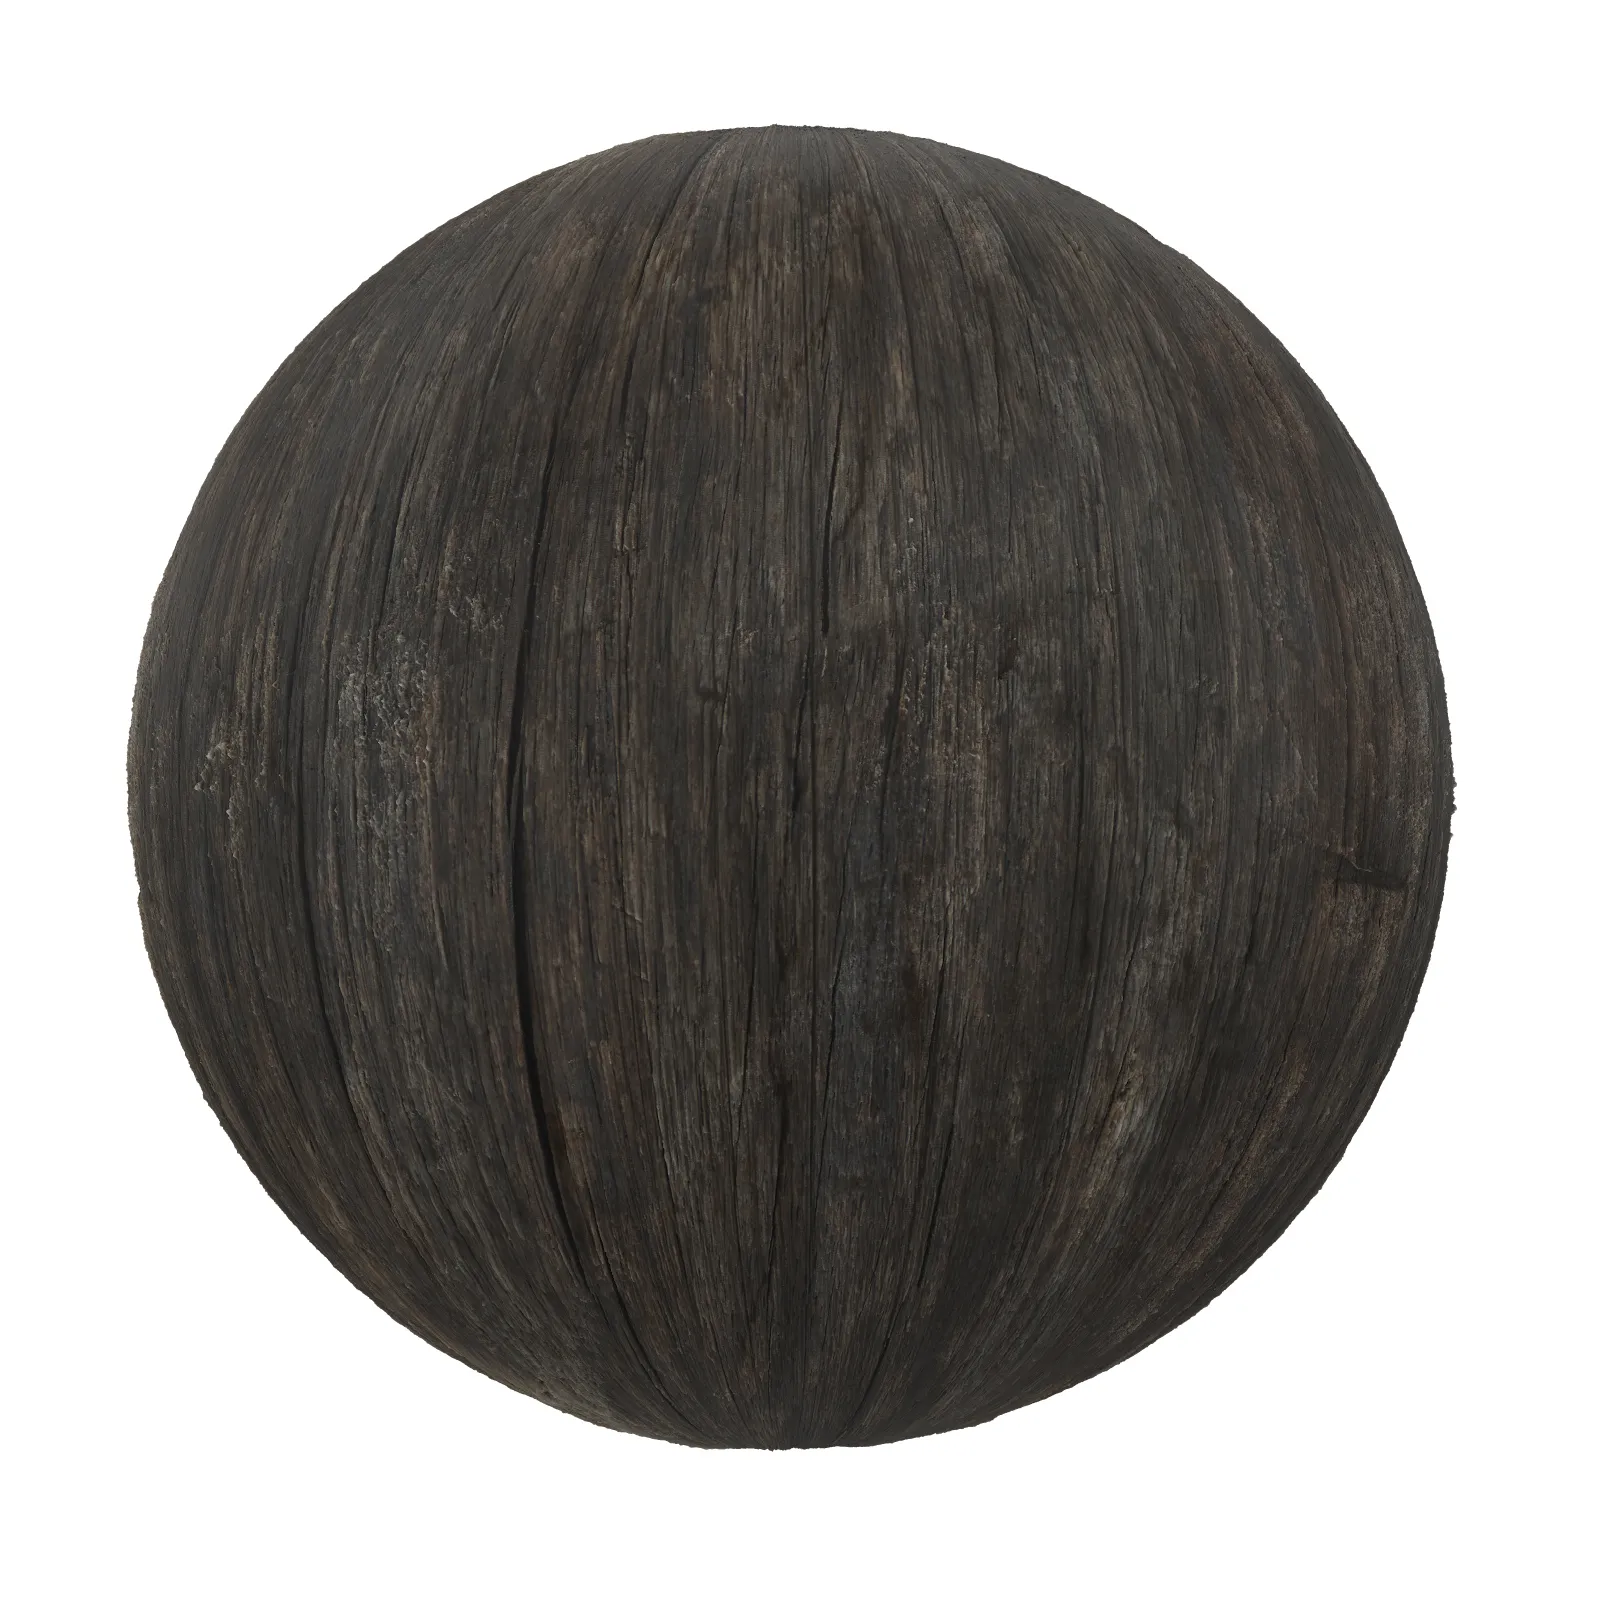 3ds Max Files – Texture – 8 – Wood Texture – 119 – Wood Texture by Minh Nguyen